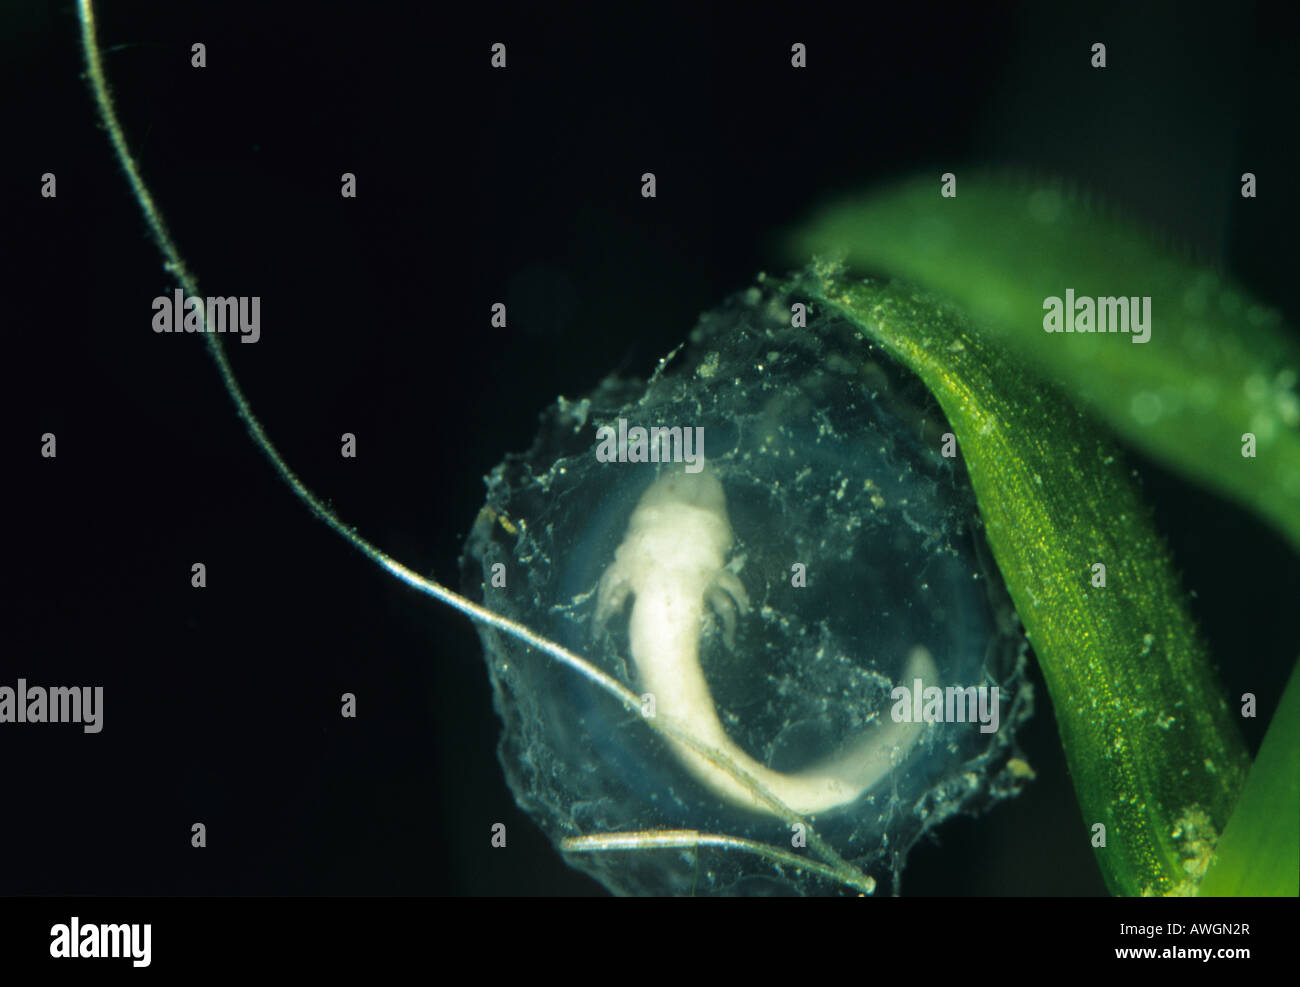 Ambystoma mexicanum, axolotl, salamander eggs, embrion Stock Photo